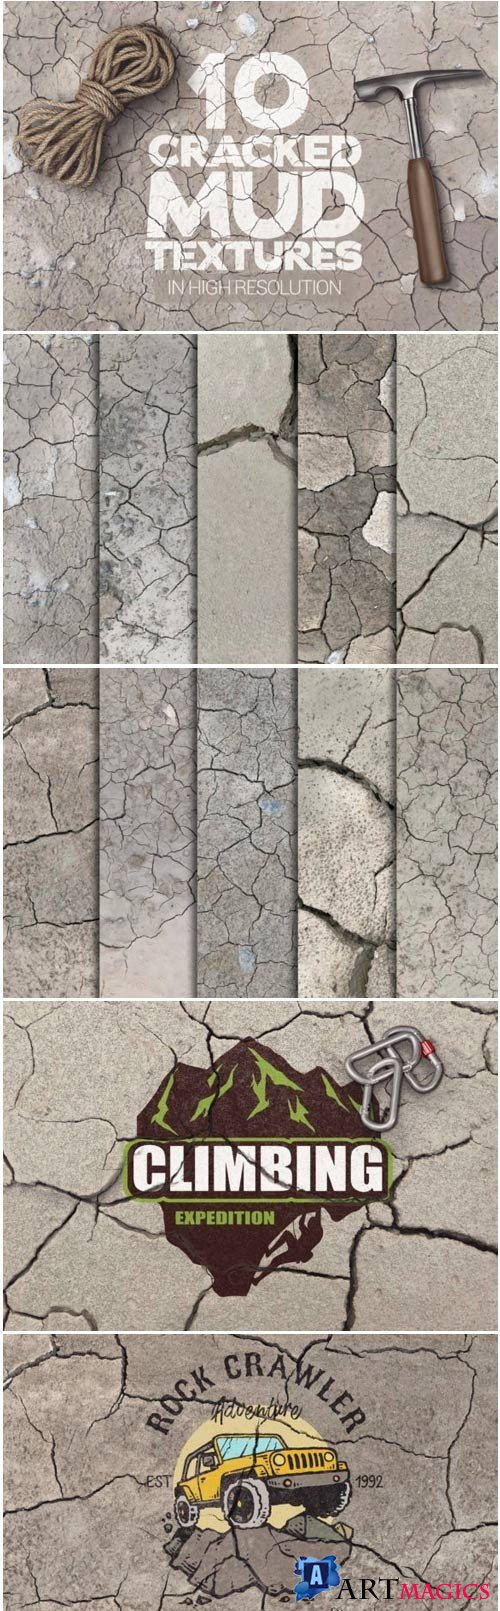 Cracked Mud Textures x10 - 3976479